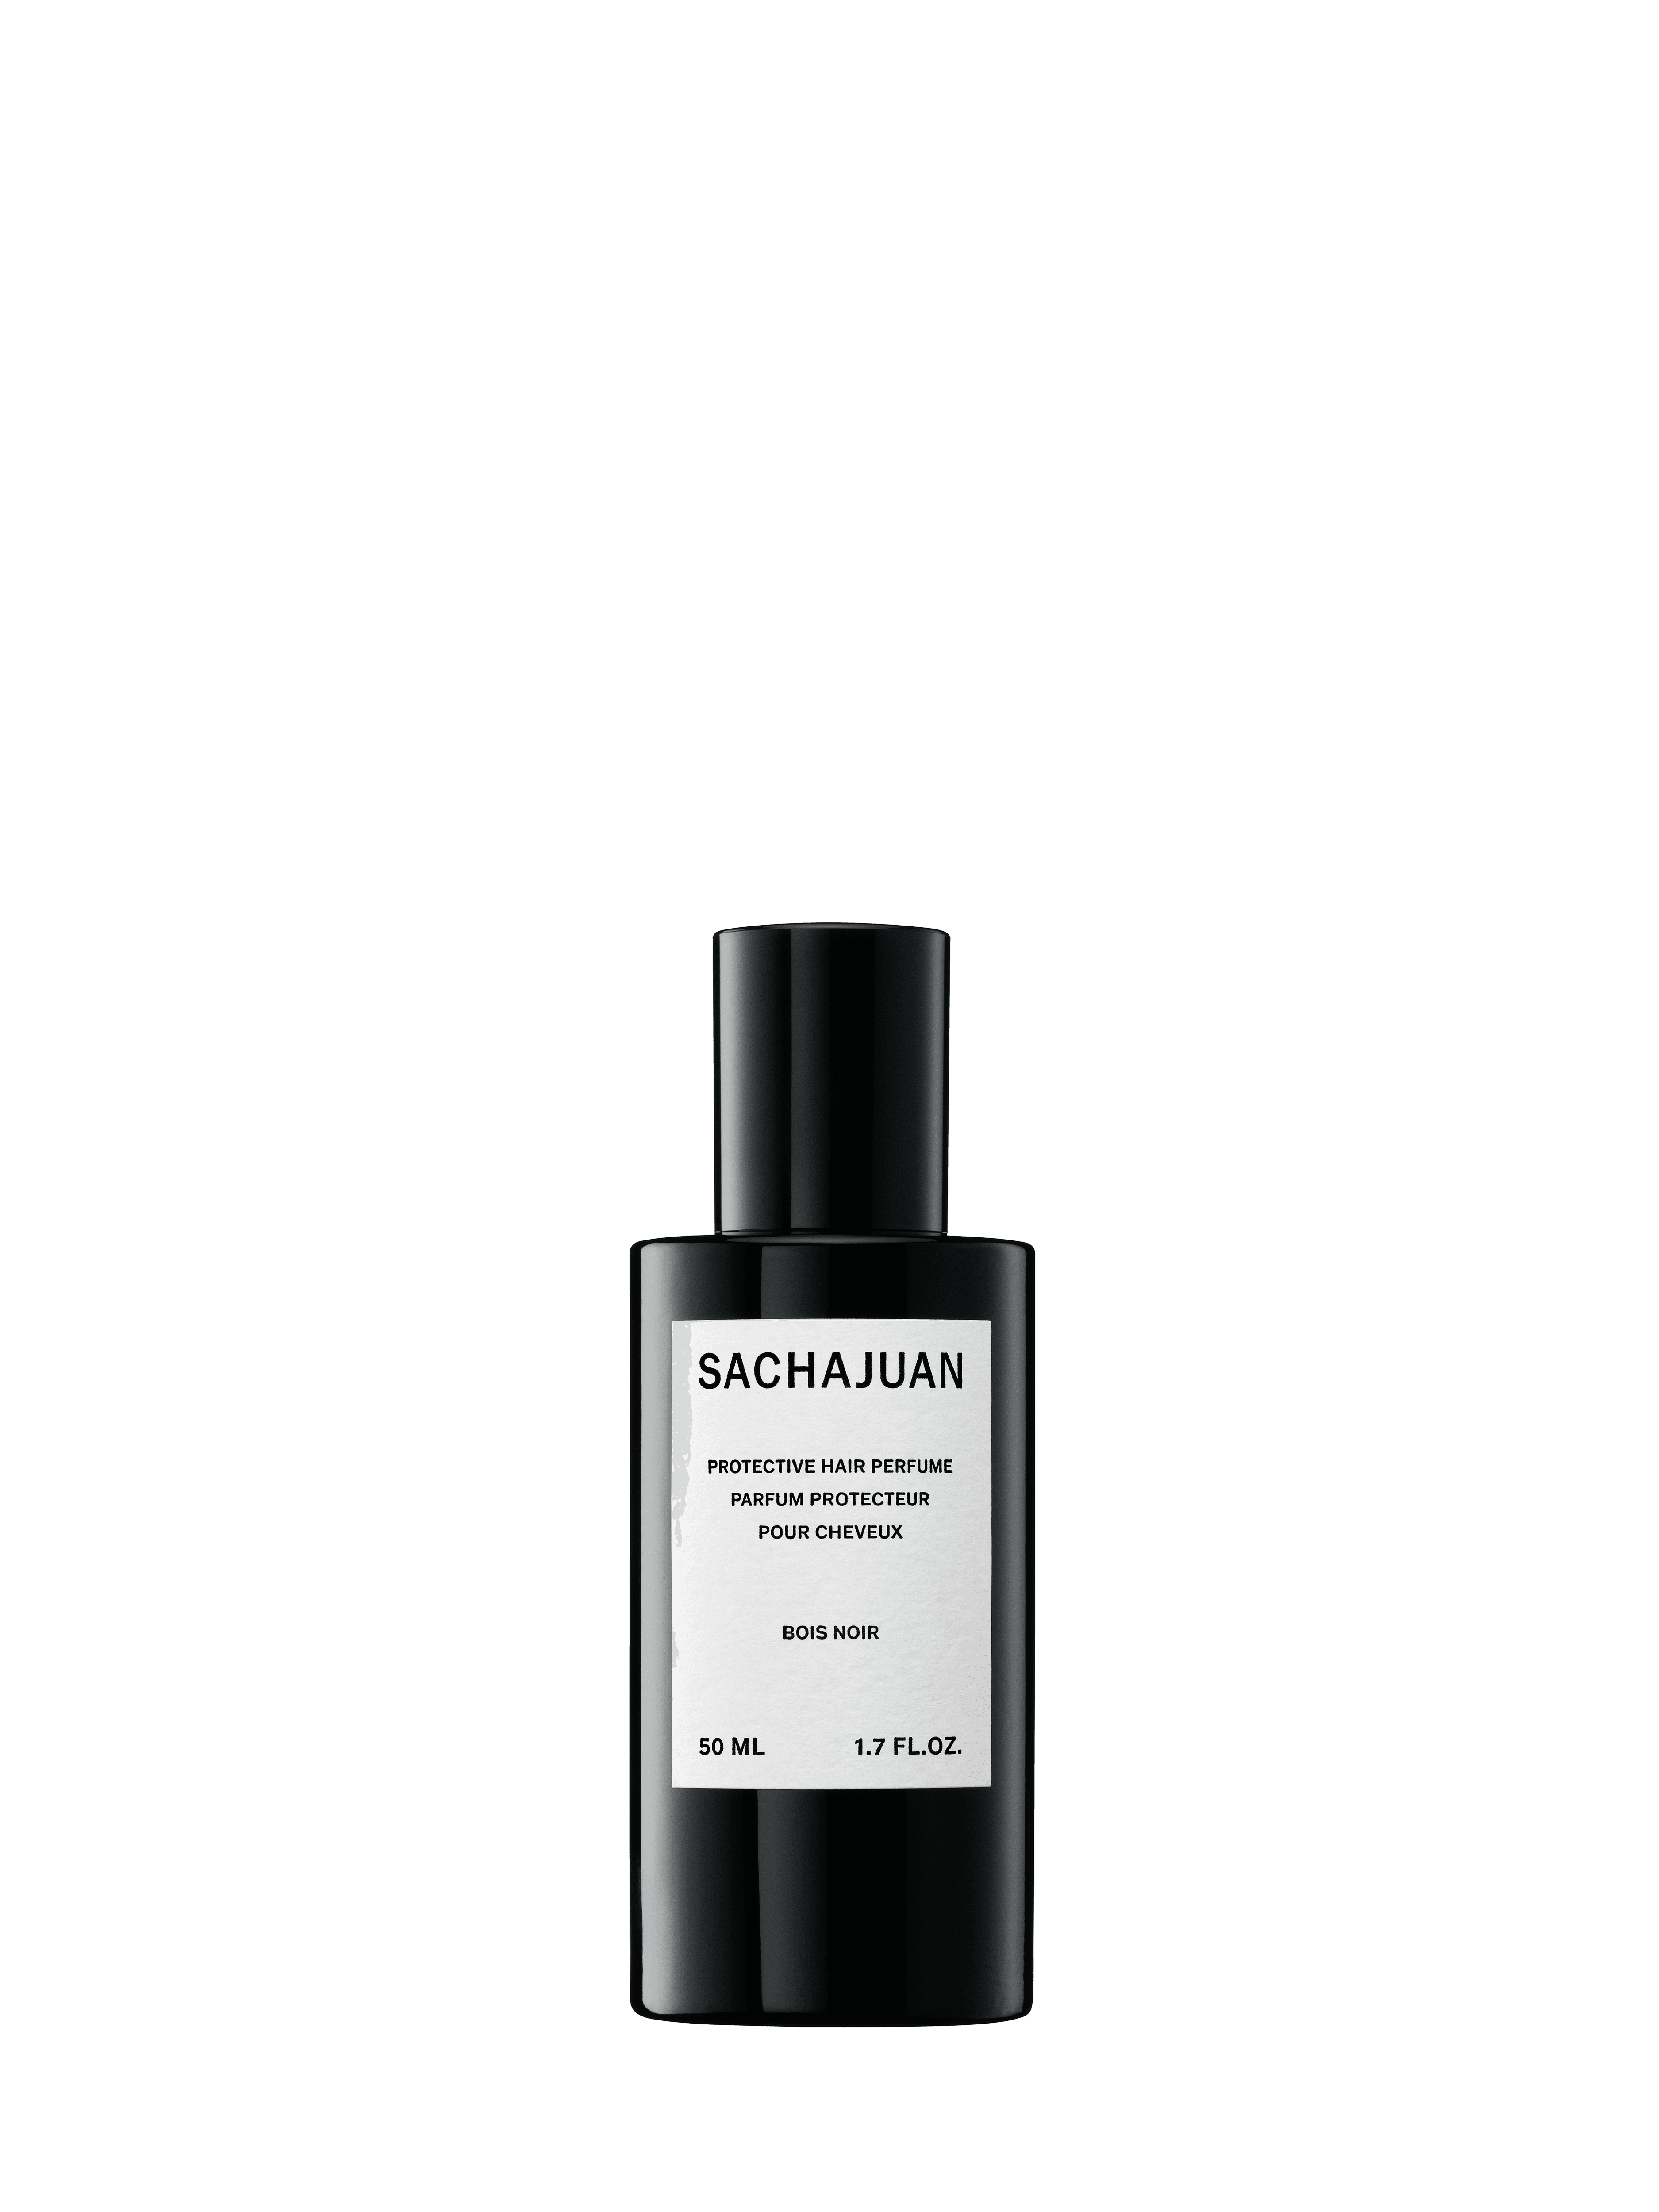 SACHAJUAN - Protective Hair Perfume